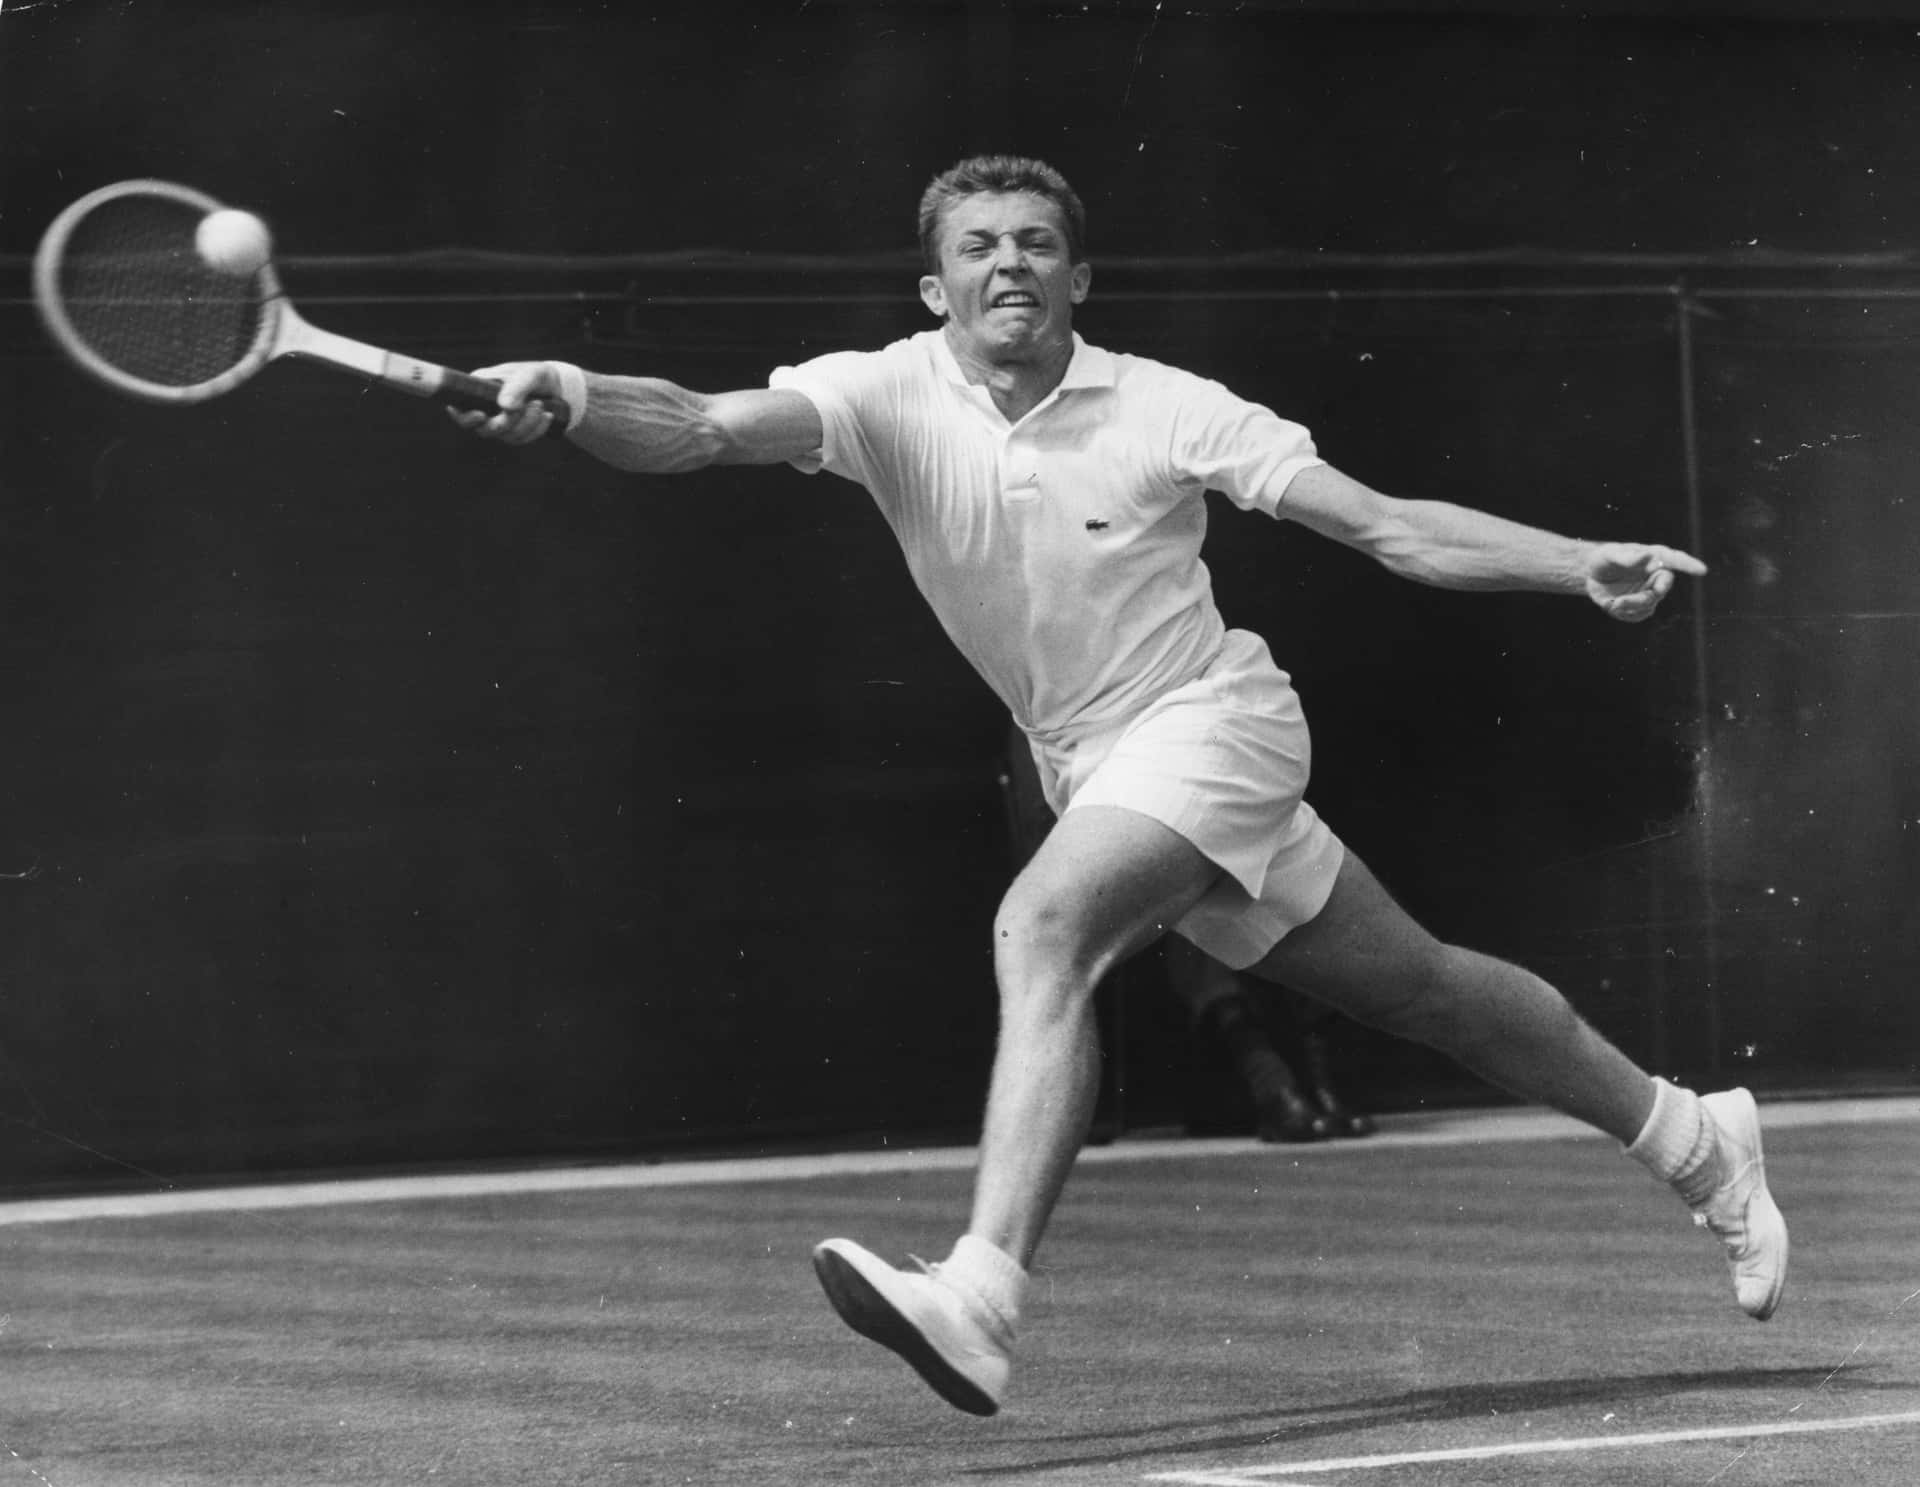 Tony Trabert Chasing The Tennis Ball Wallpaper